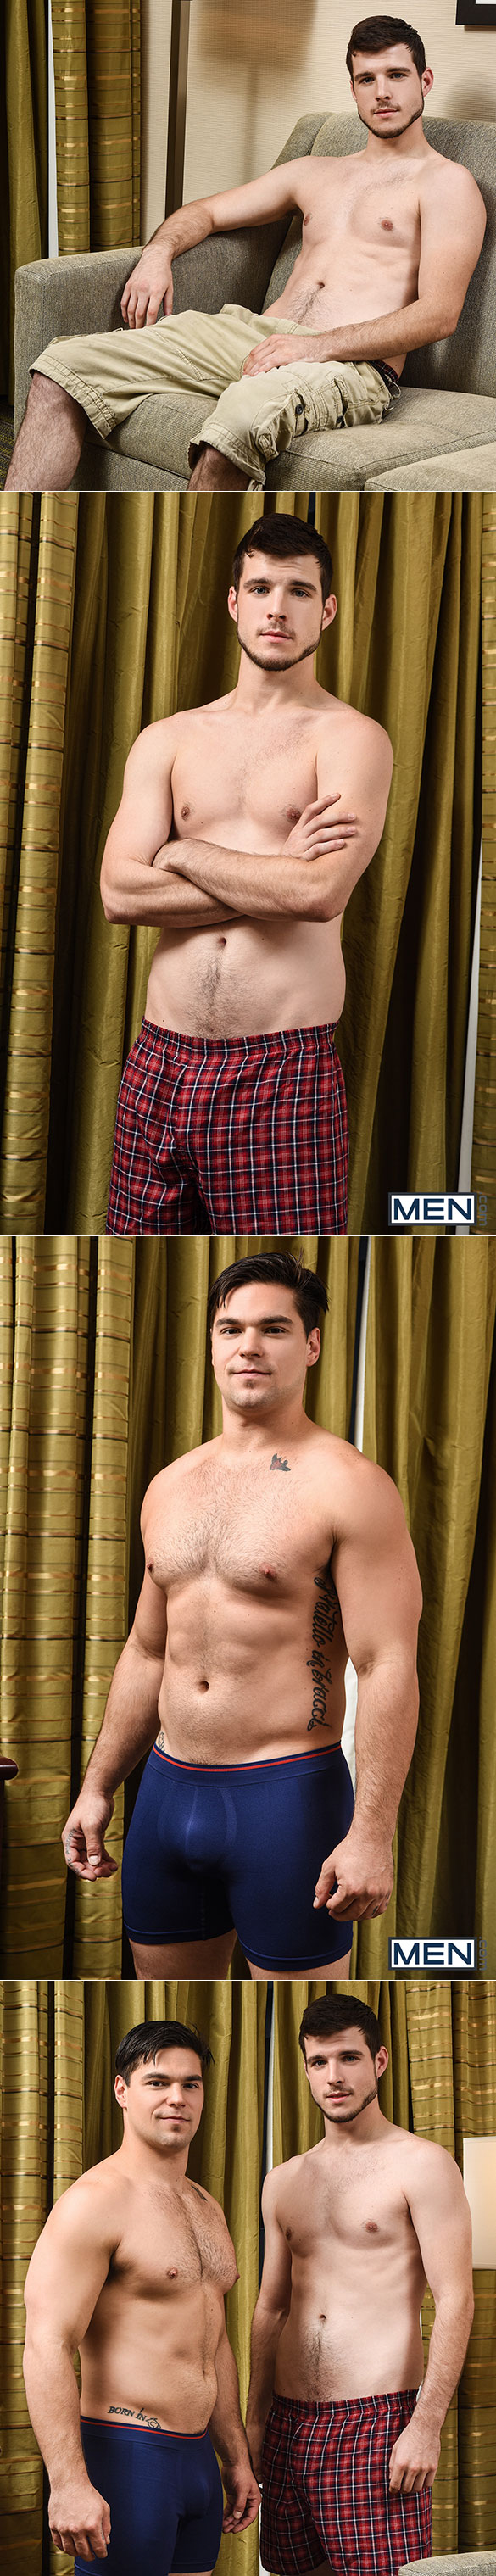 Men.com: Aspen bottoms for Noah Jones in "Pretending"